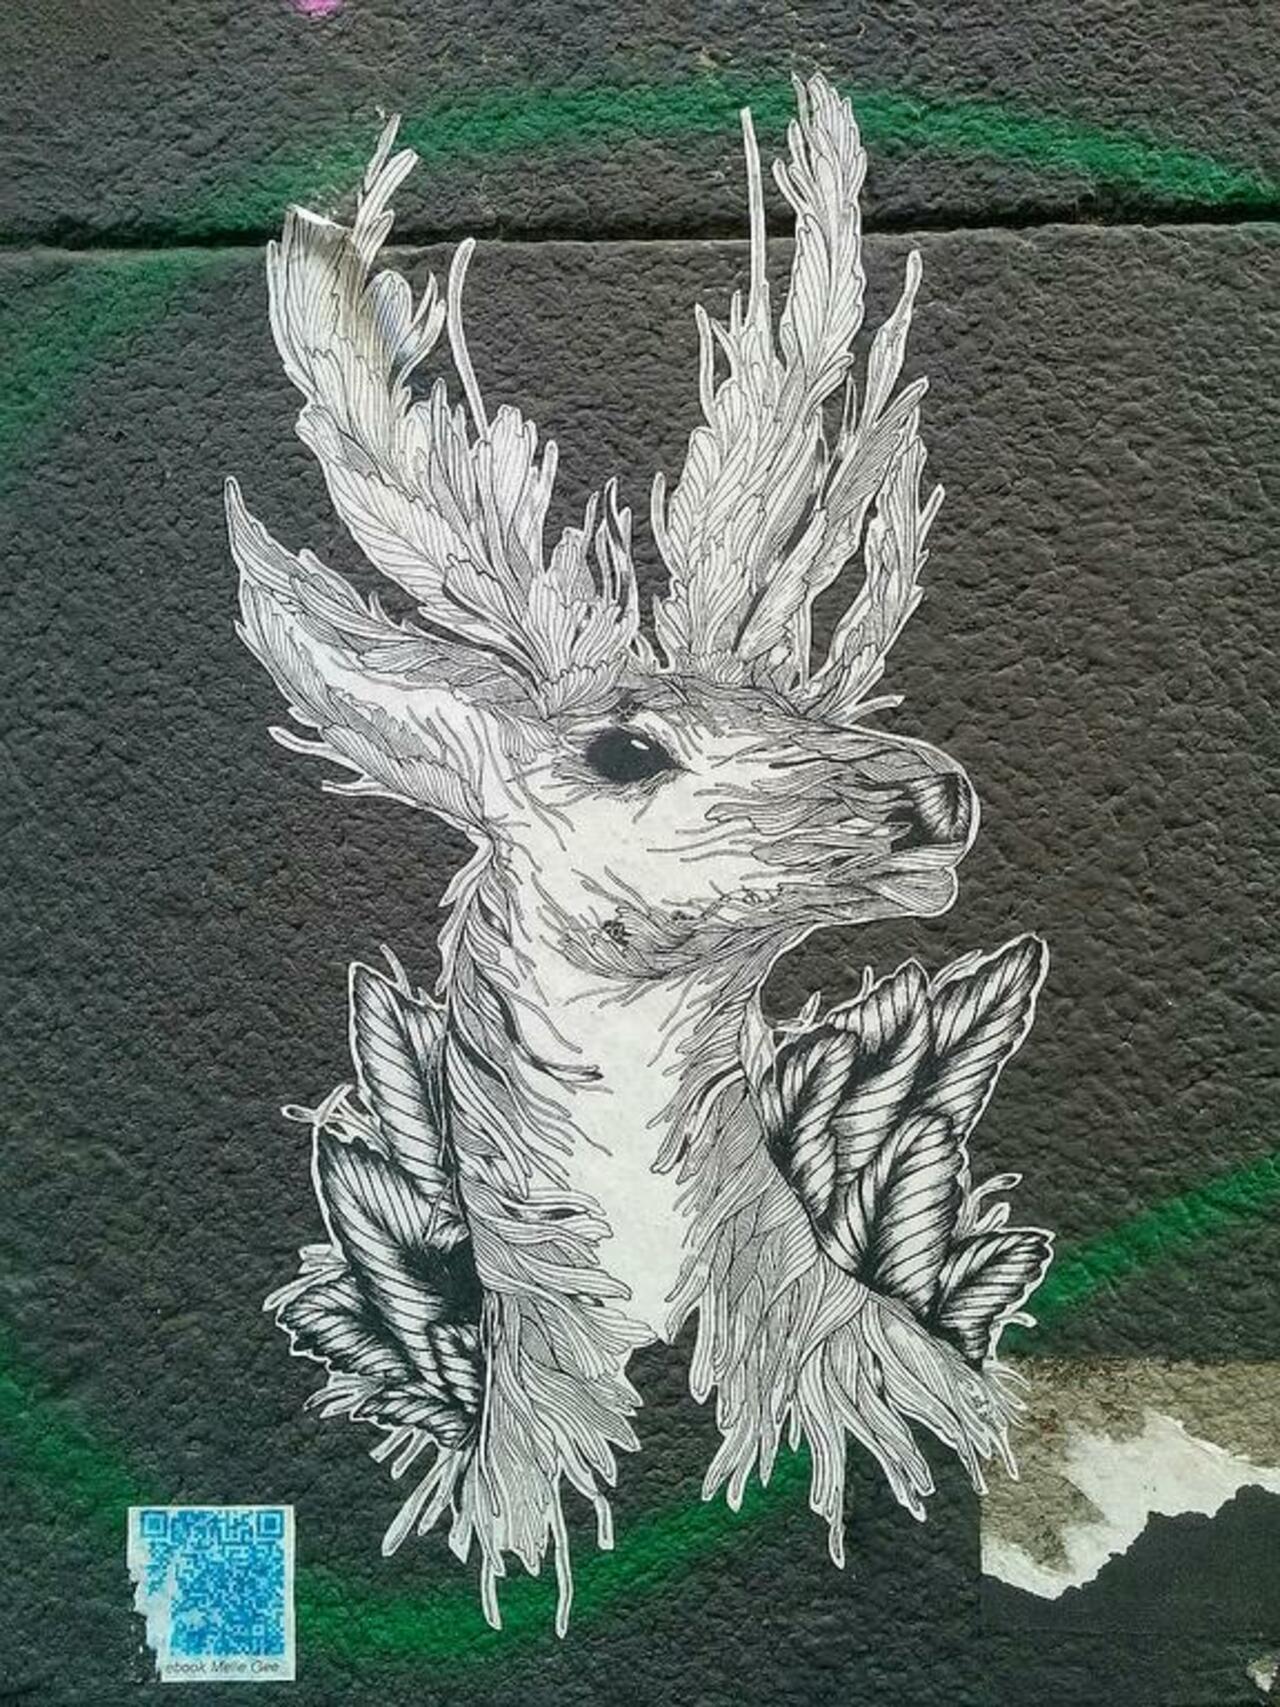 Street Art by melle gee in #Marseille http://www.urbacolors.com #art #mural #graffiti #streetart http://t.co/Ykasi1nJJ2